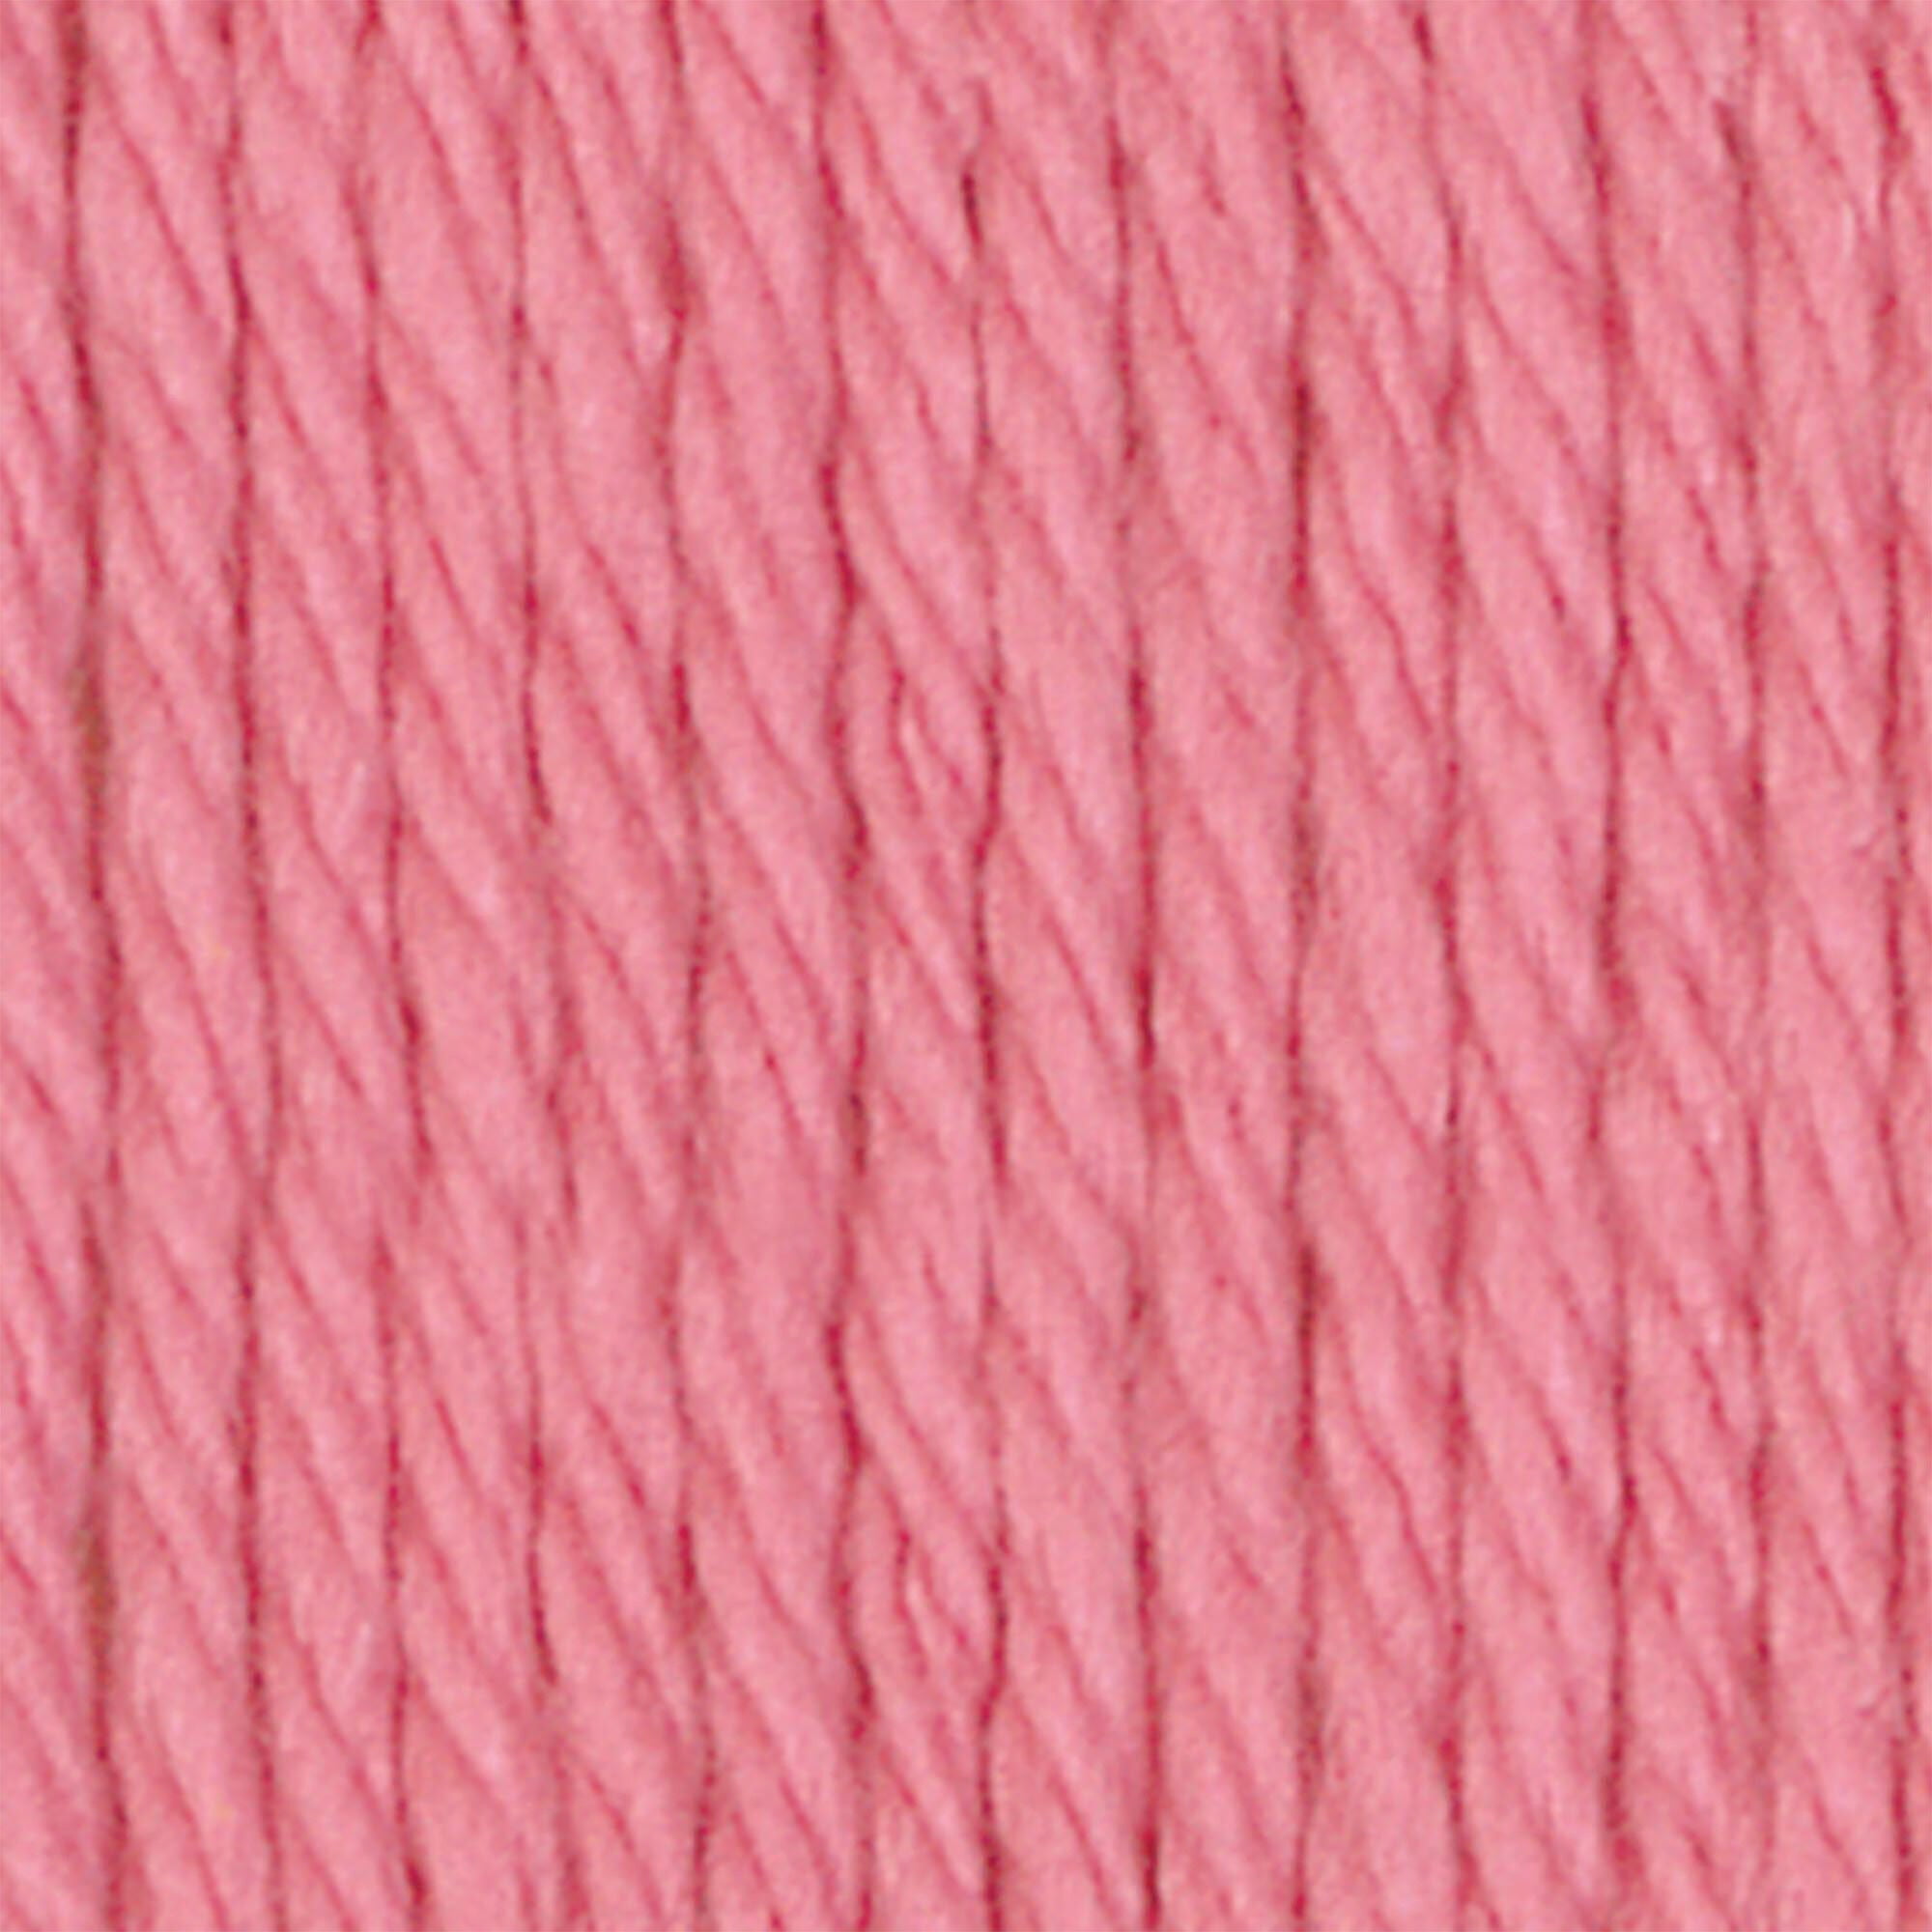  VILLFUL Baby Yarn Soft Yarn Yarn Sugar and Cream Cotton Yarn  Black Yarn Chunky Yarn for Crocheting Coarse Wool Roving White Yarn  Textured Yarn Red Yarn Storage Baby Soft Yarn 